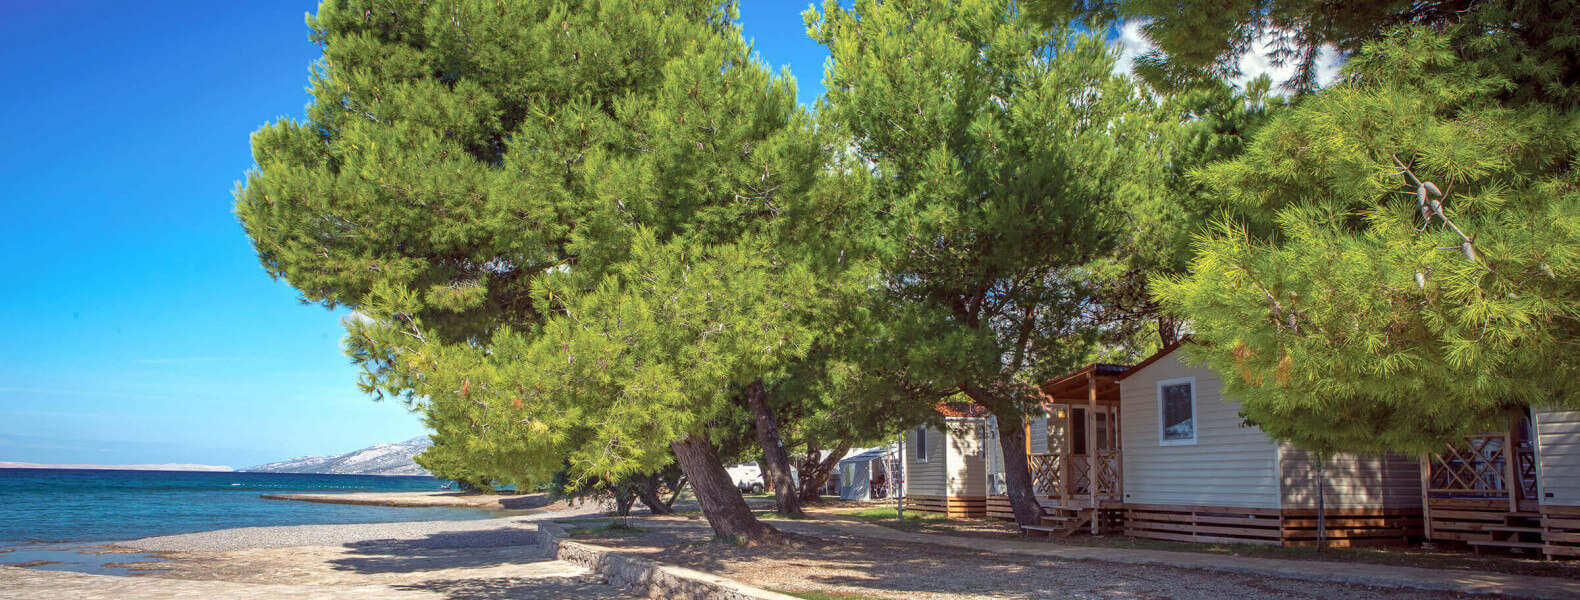 Camping Paklenica - mobilné domy